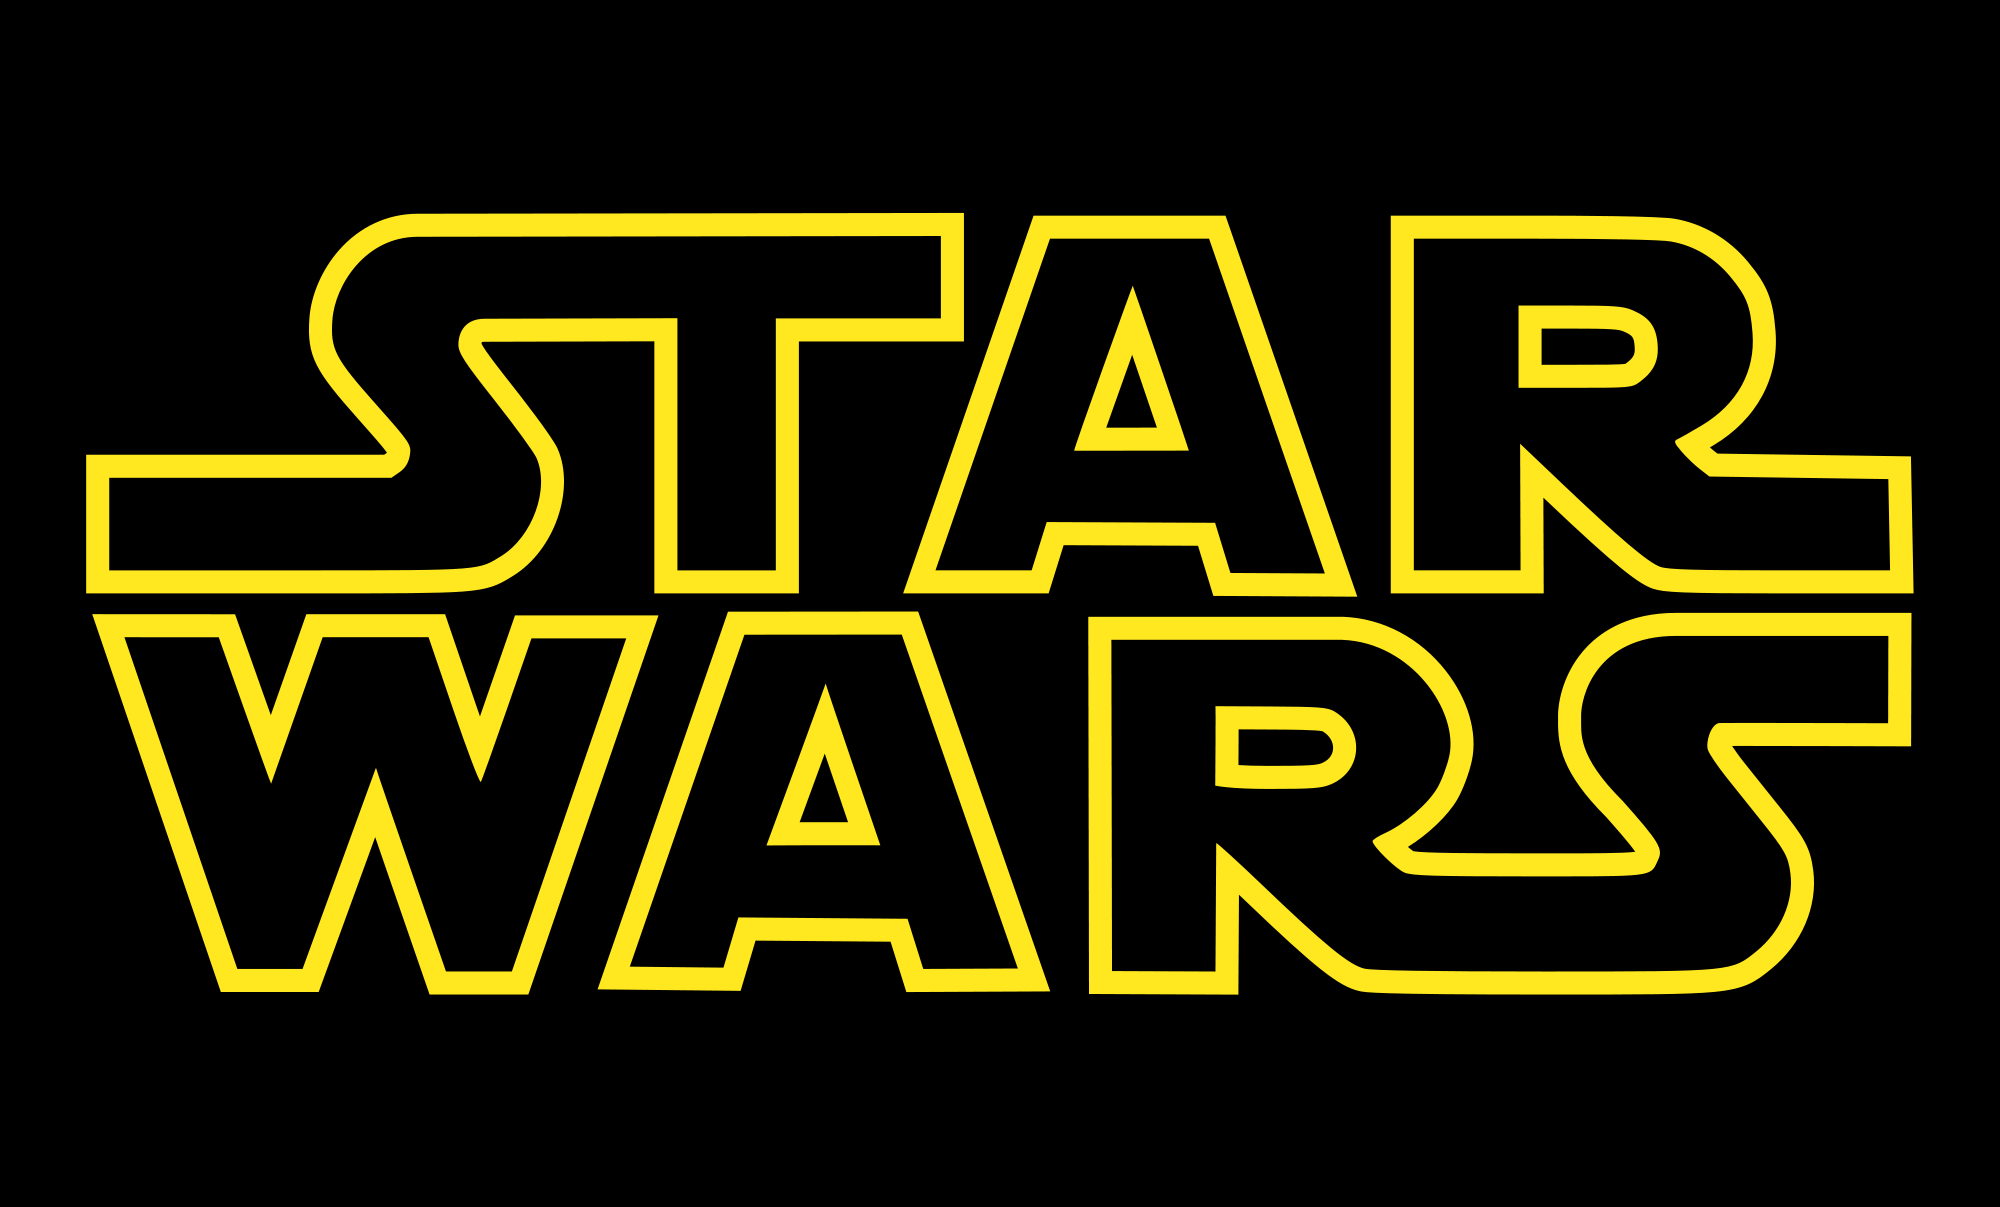 Star Wars vai ter nova trilogia [vídeo]